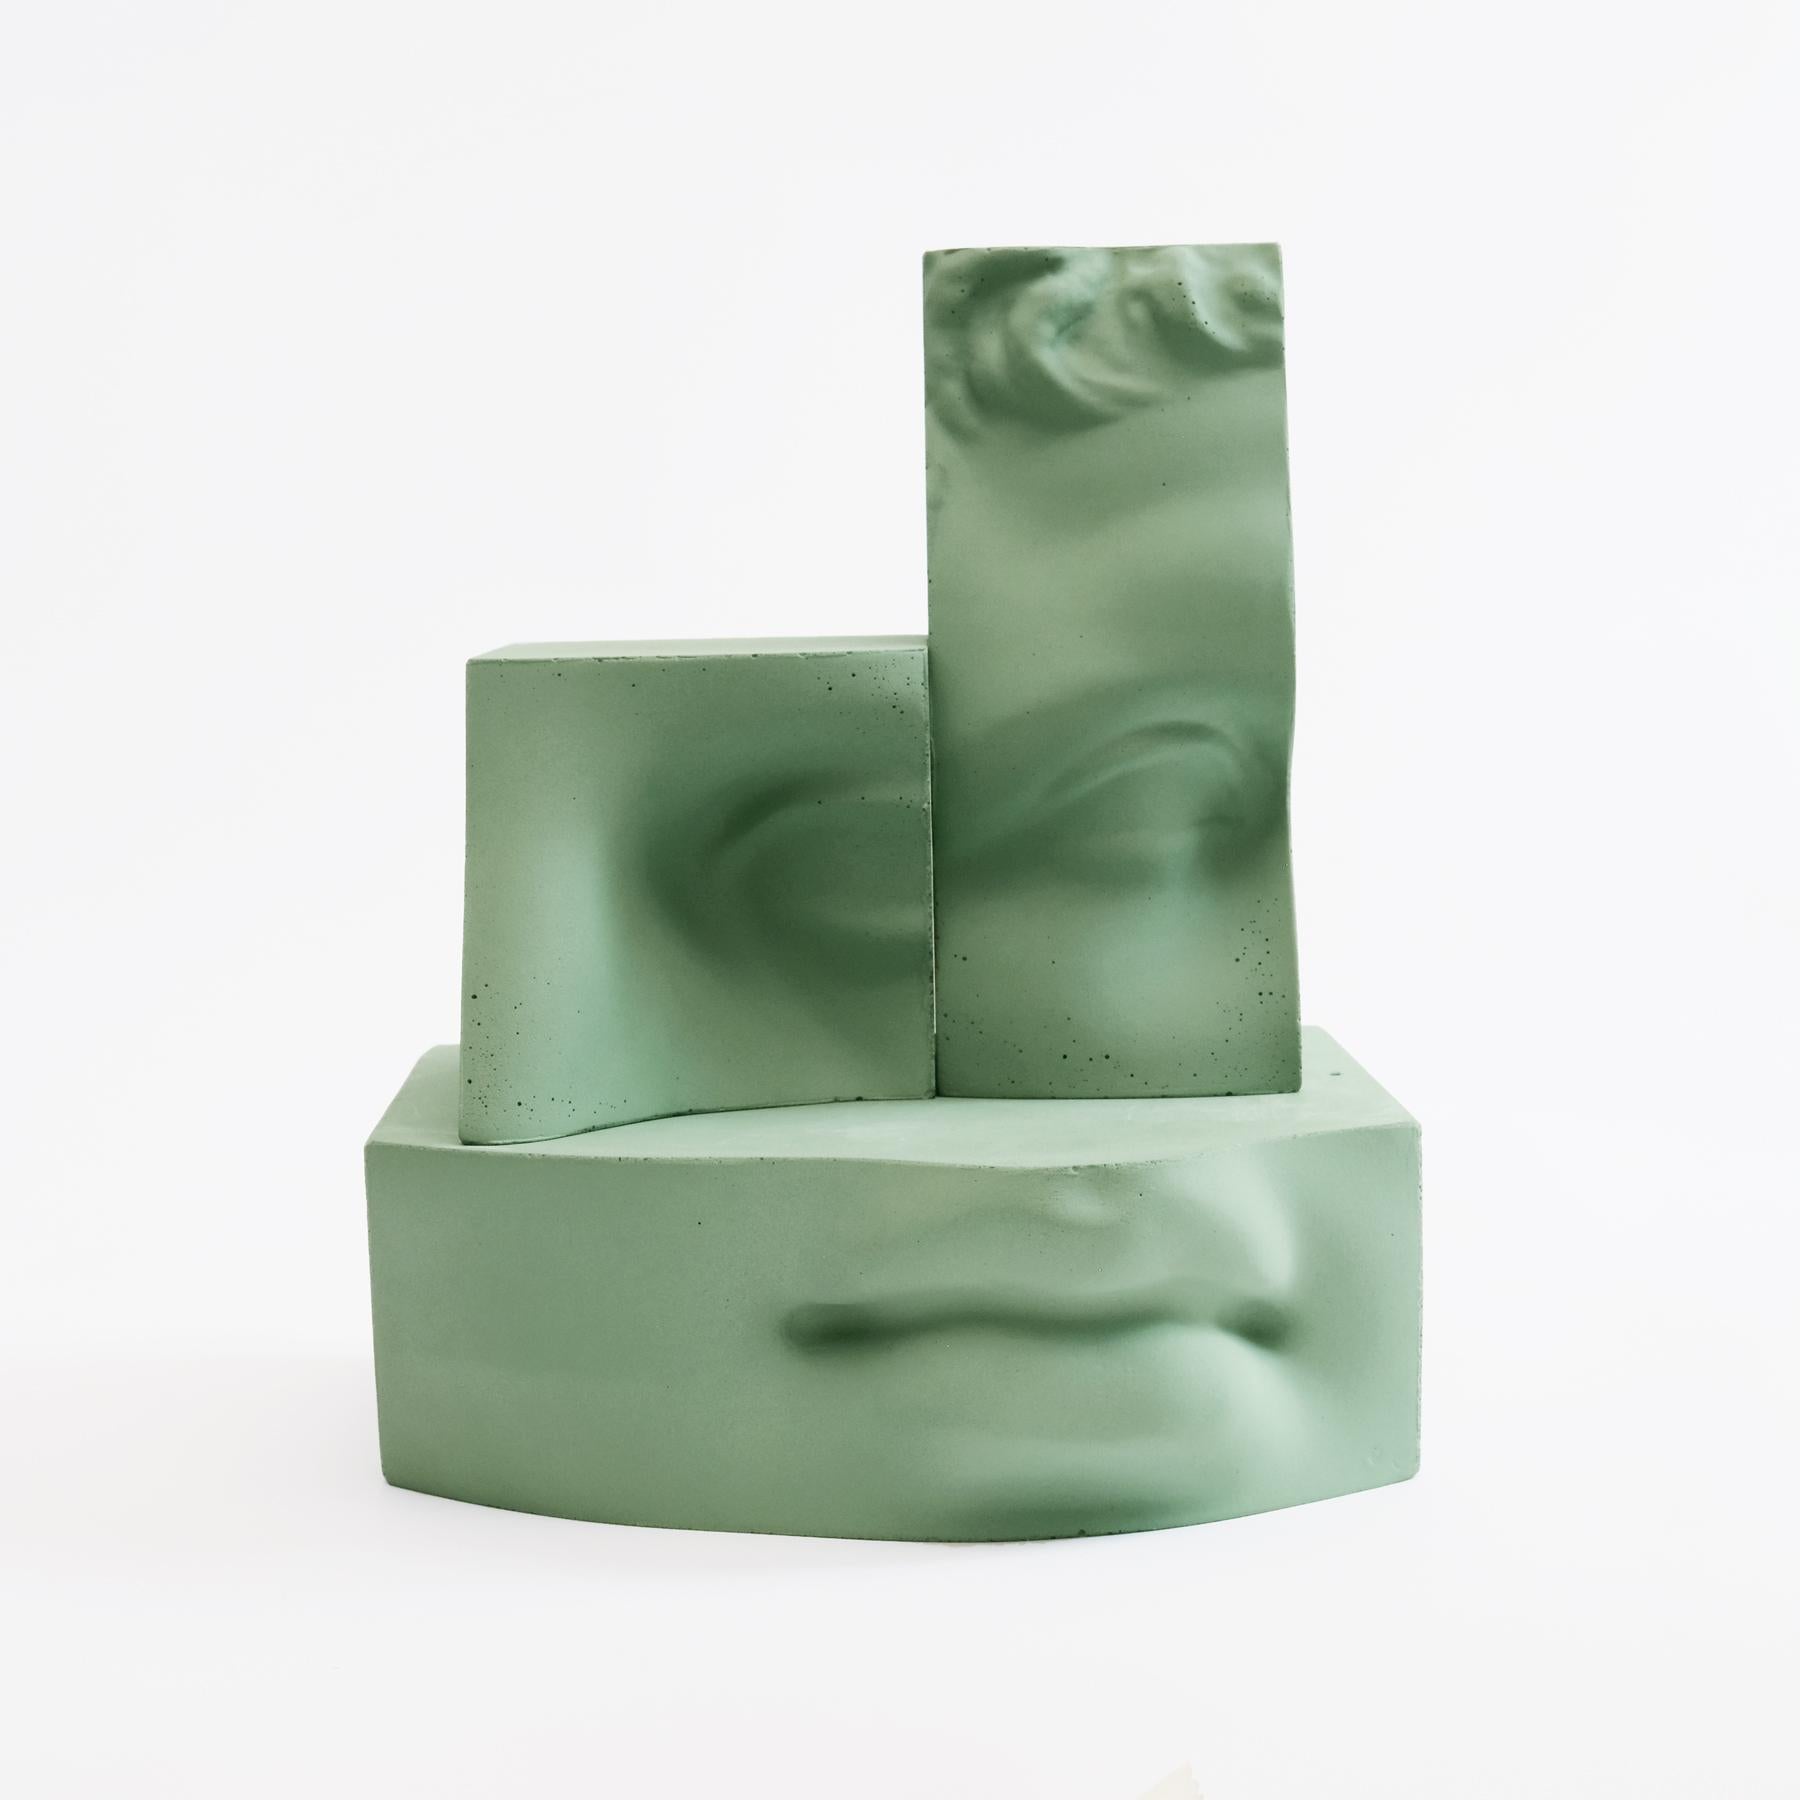 Italian Hermes - Mint Green - Design Sculpture Paolo Giordano Concrete Cement Cast For Sale